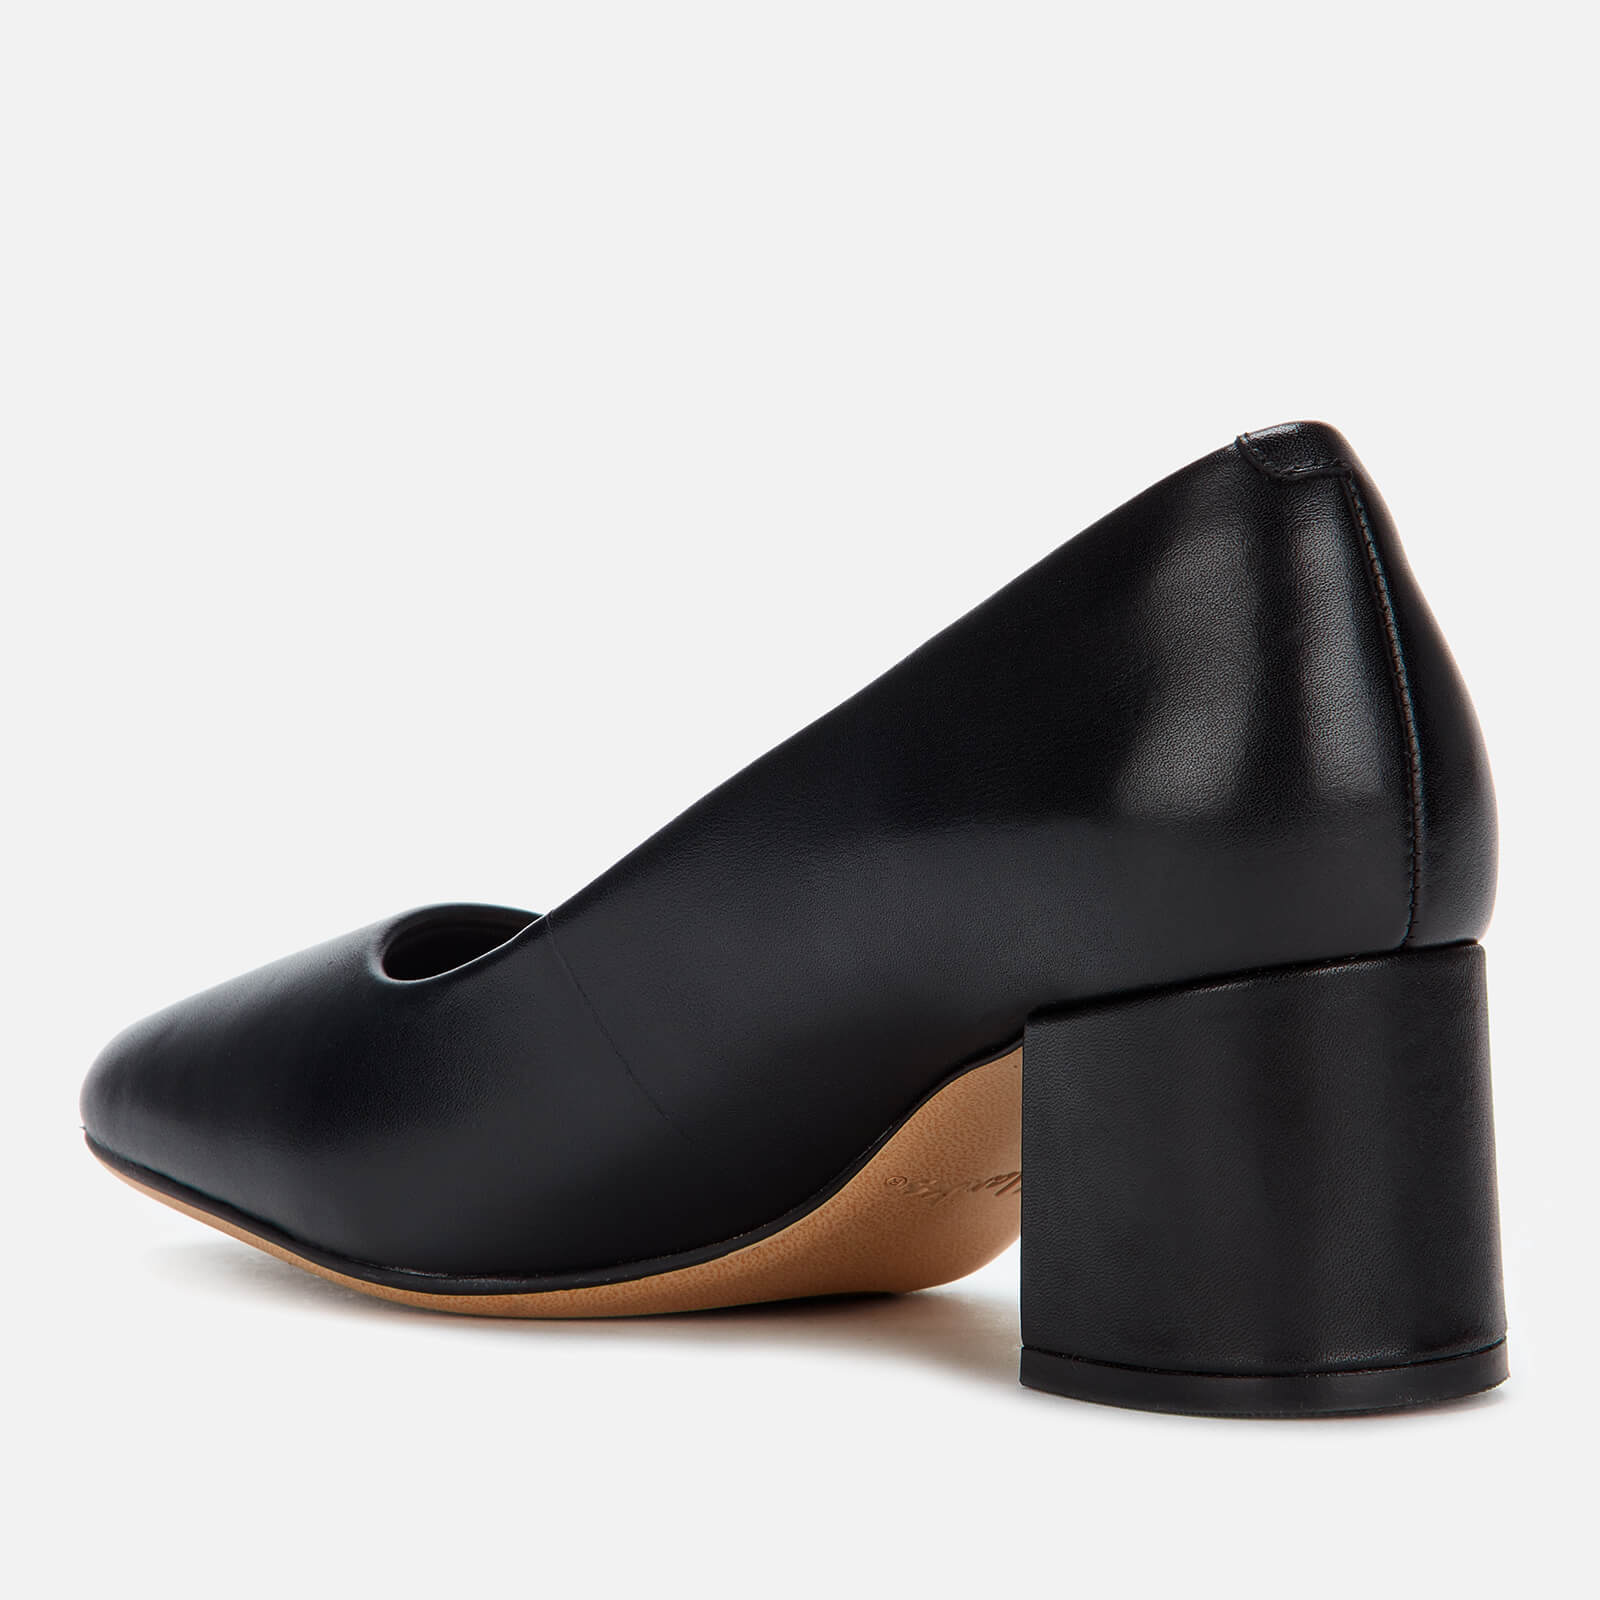 Clarks Women's Sheer Rose Leather Block Heeled Shoes - Black - UK 3